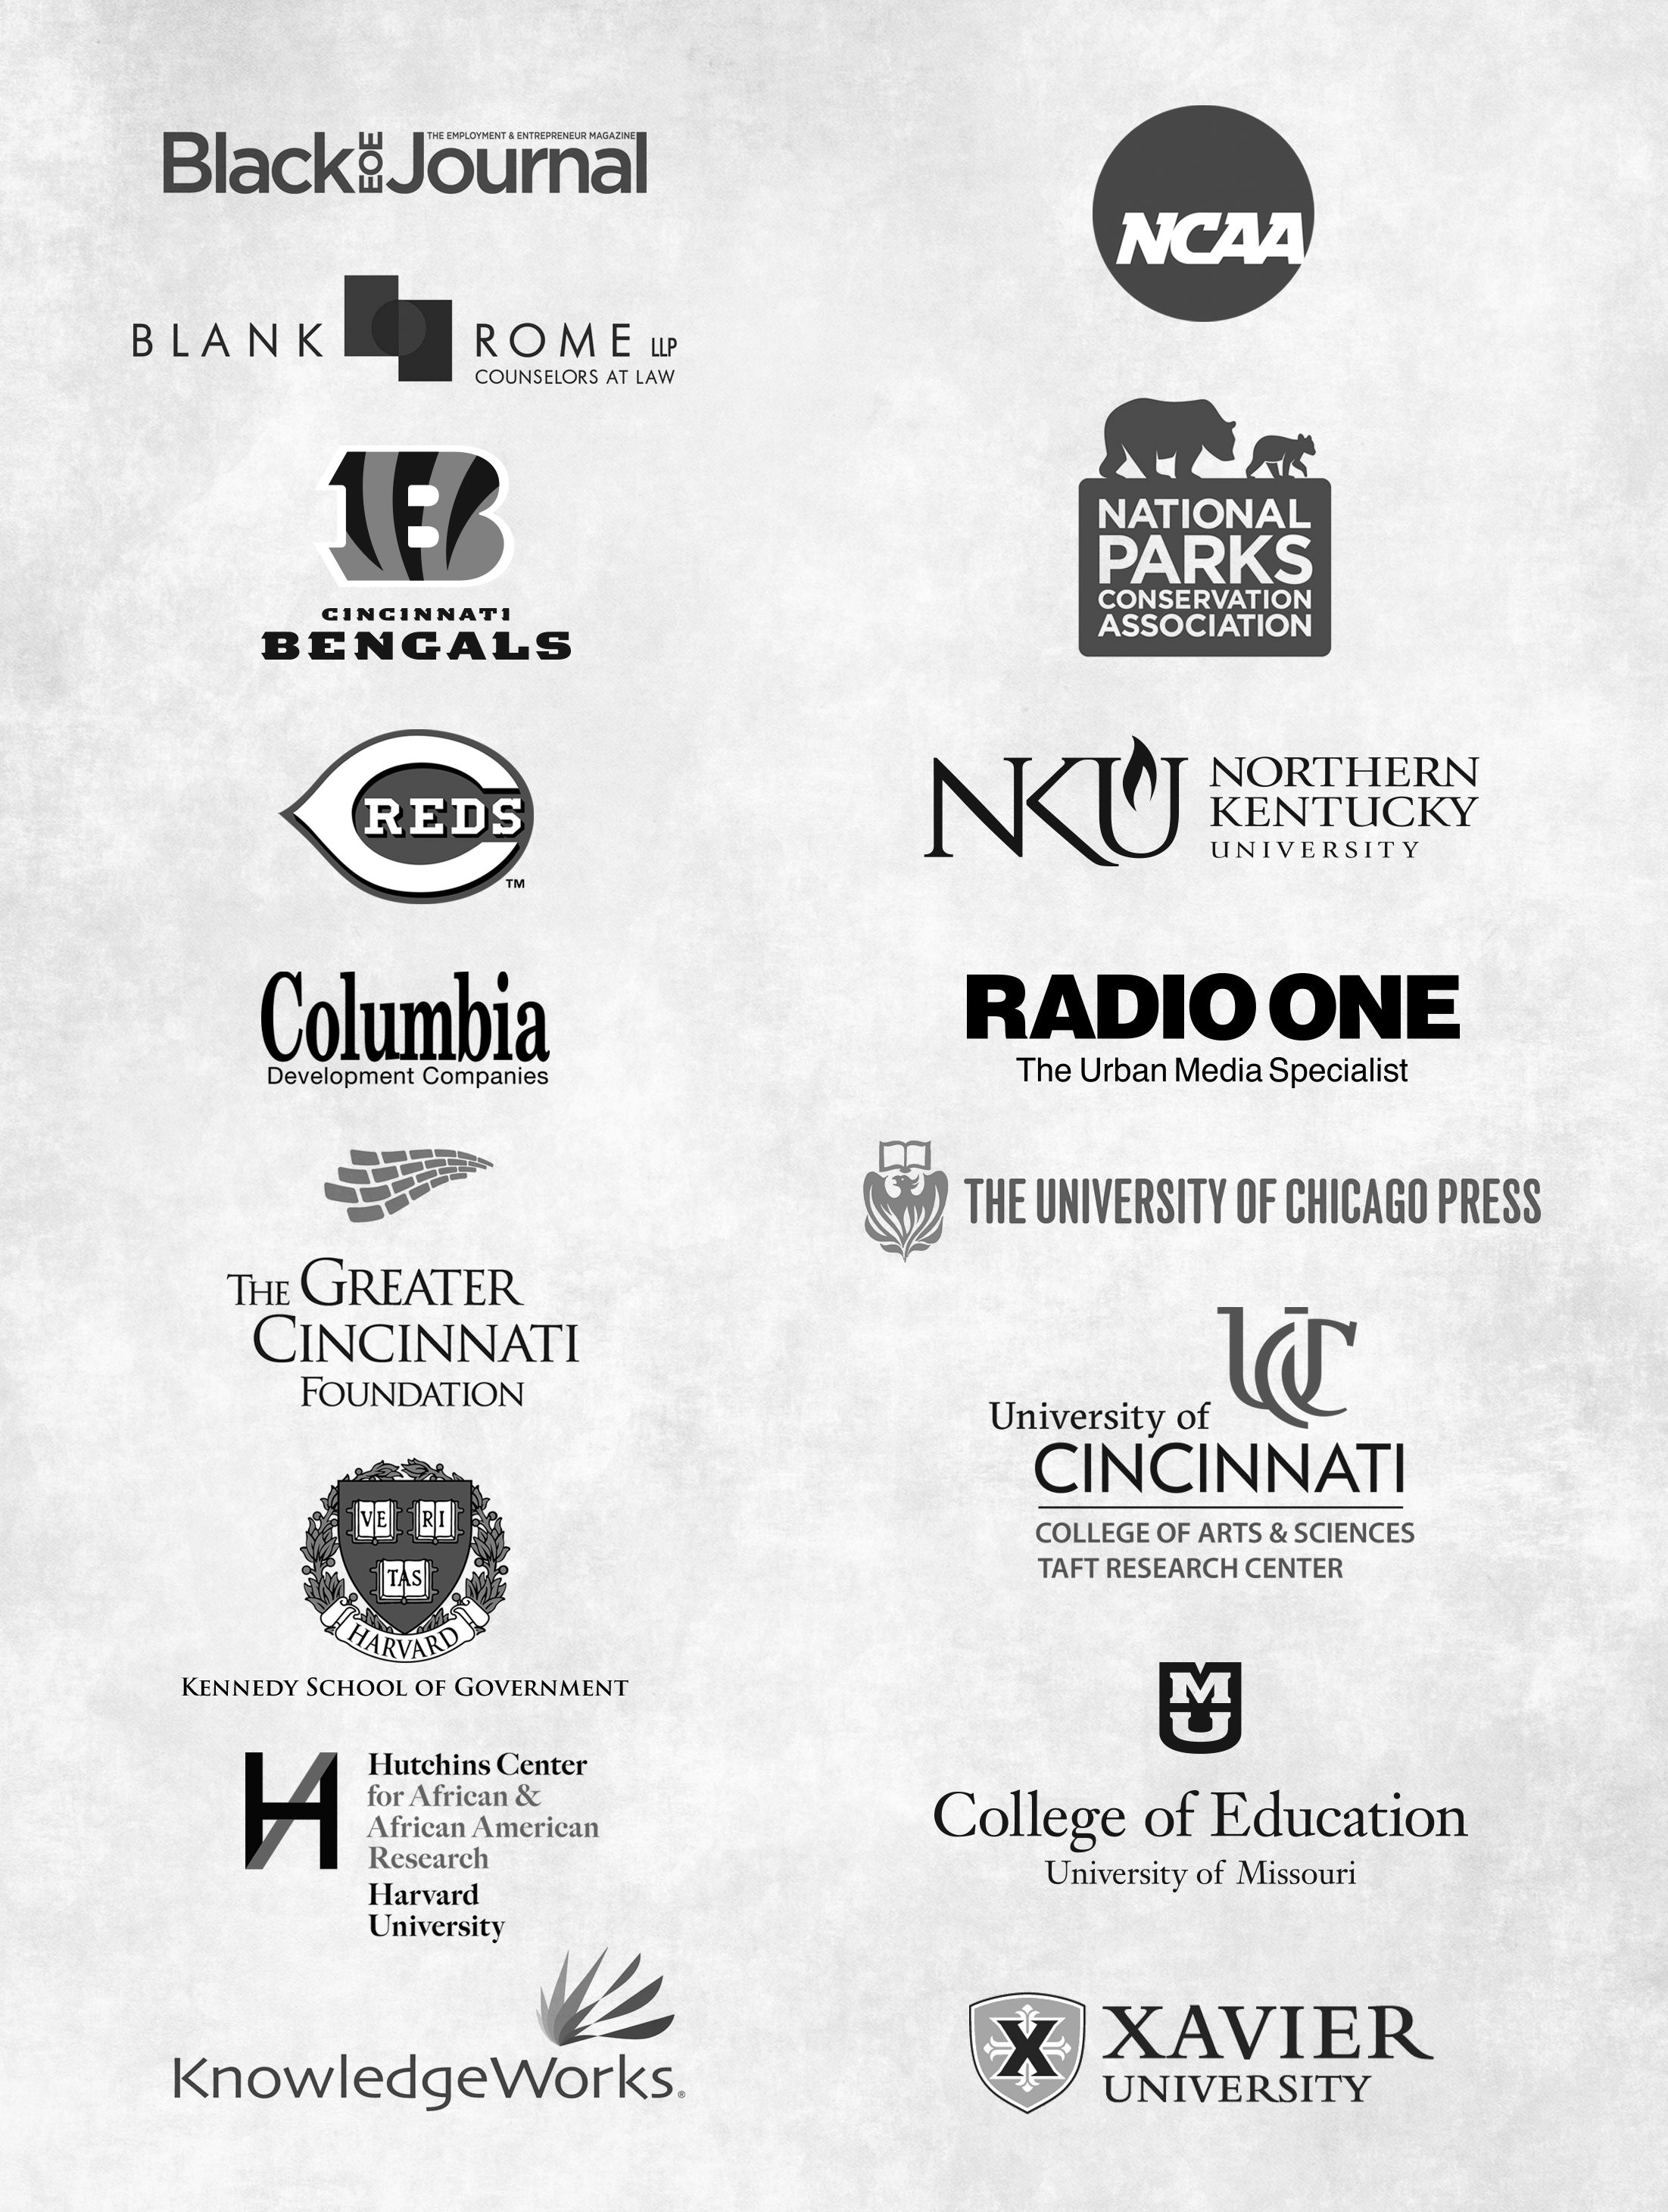 2017 Conference Sponsors